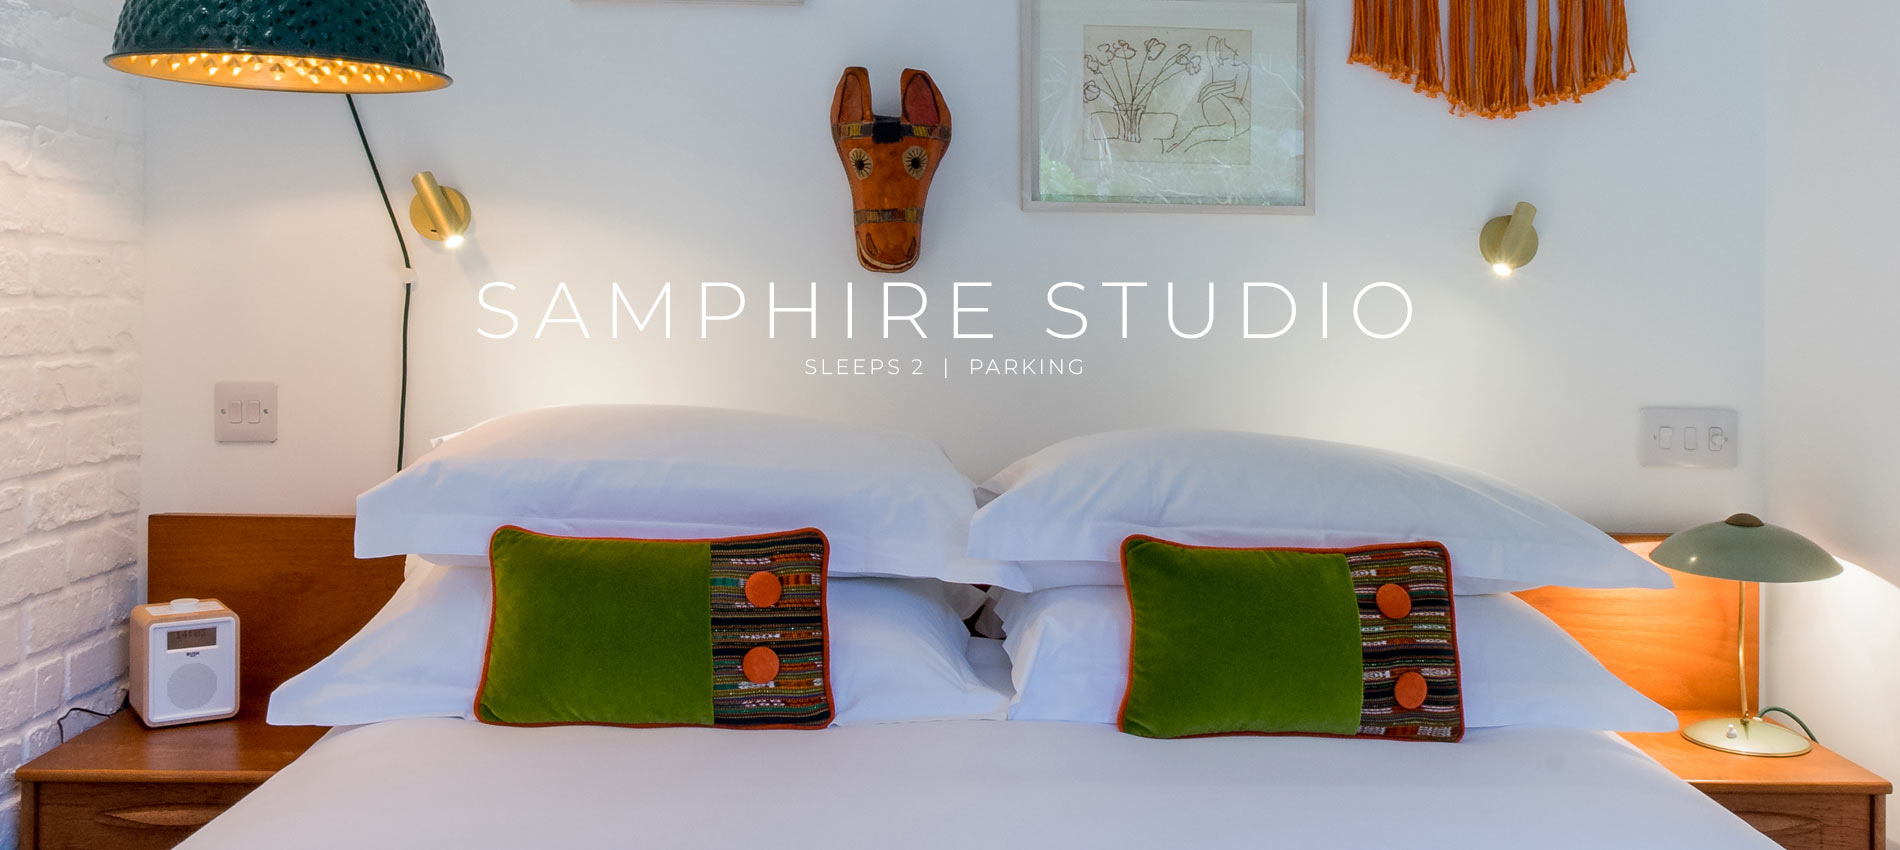 samphire-studio-st-ives